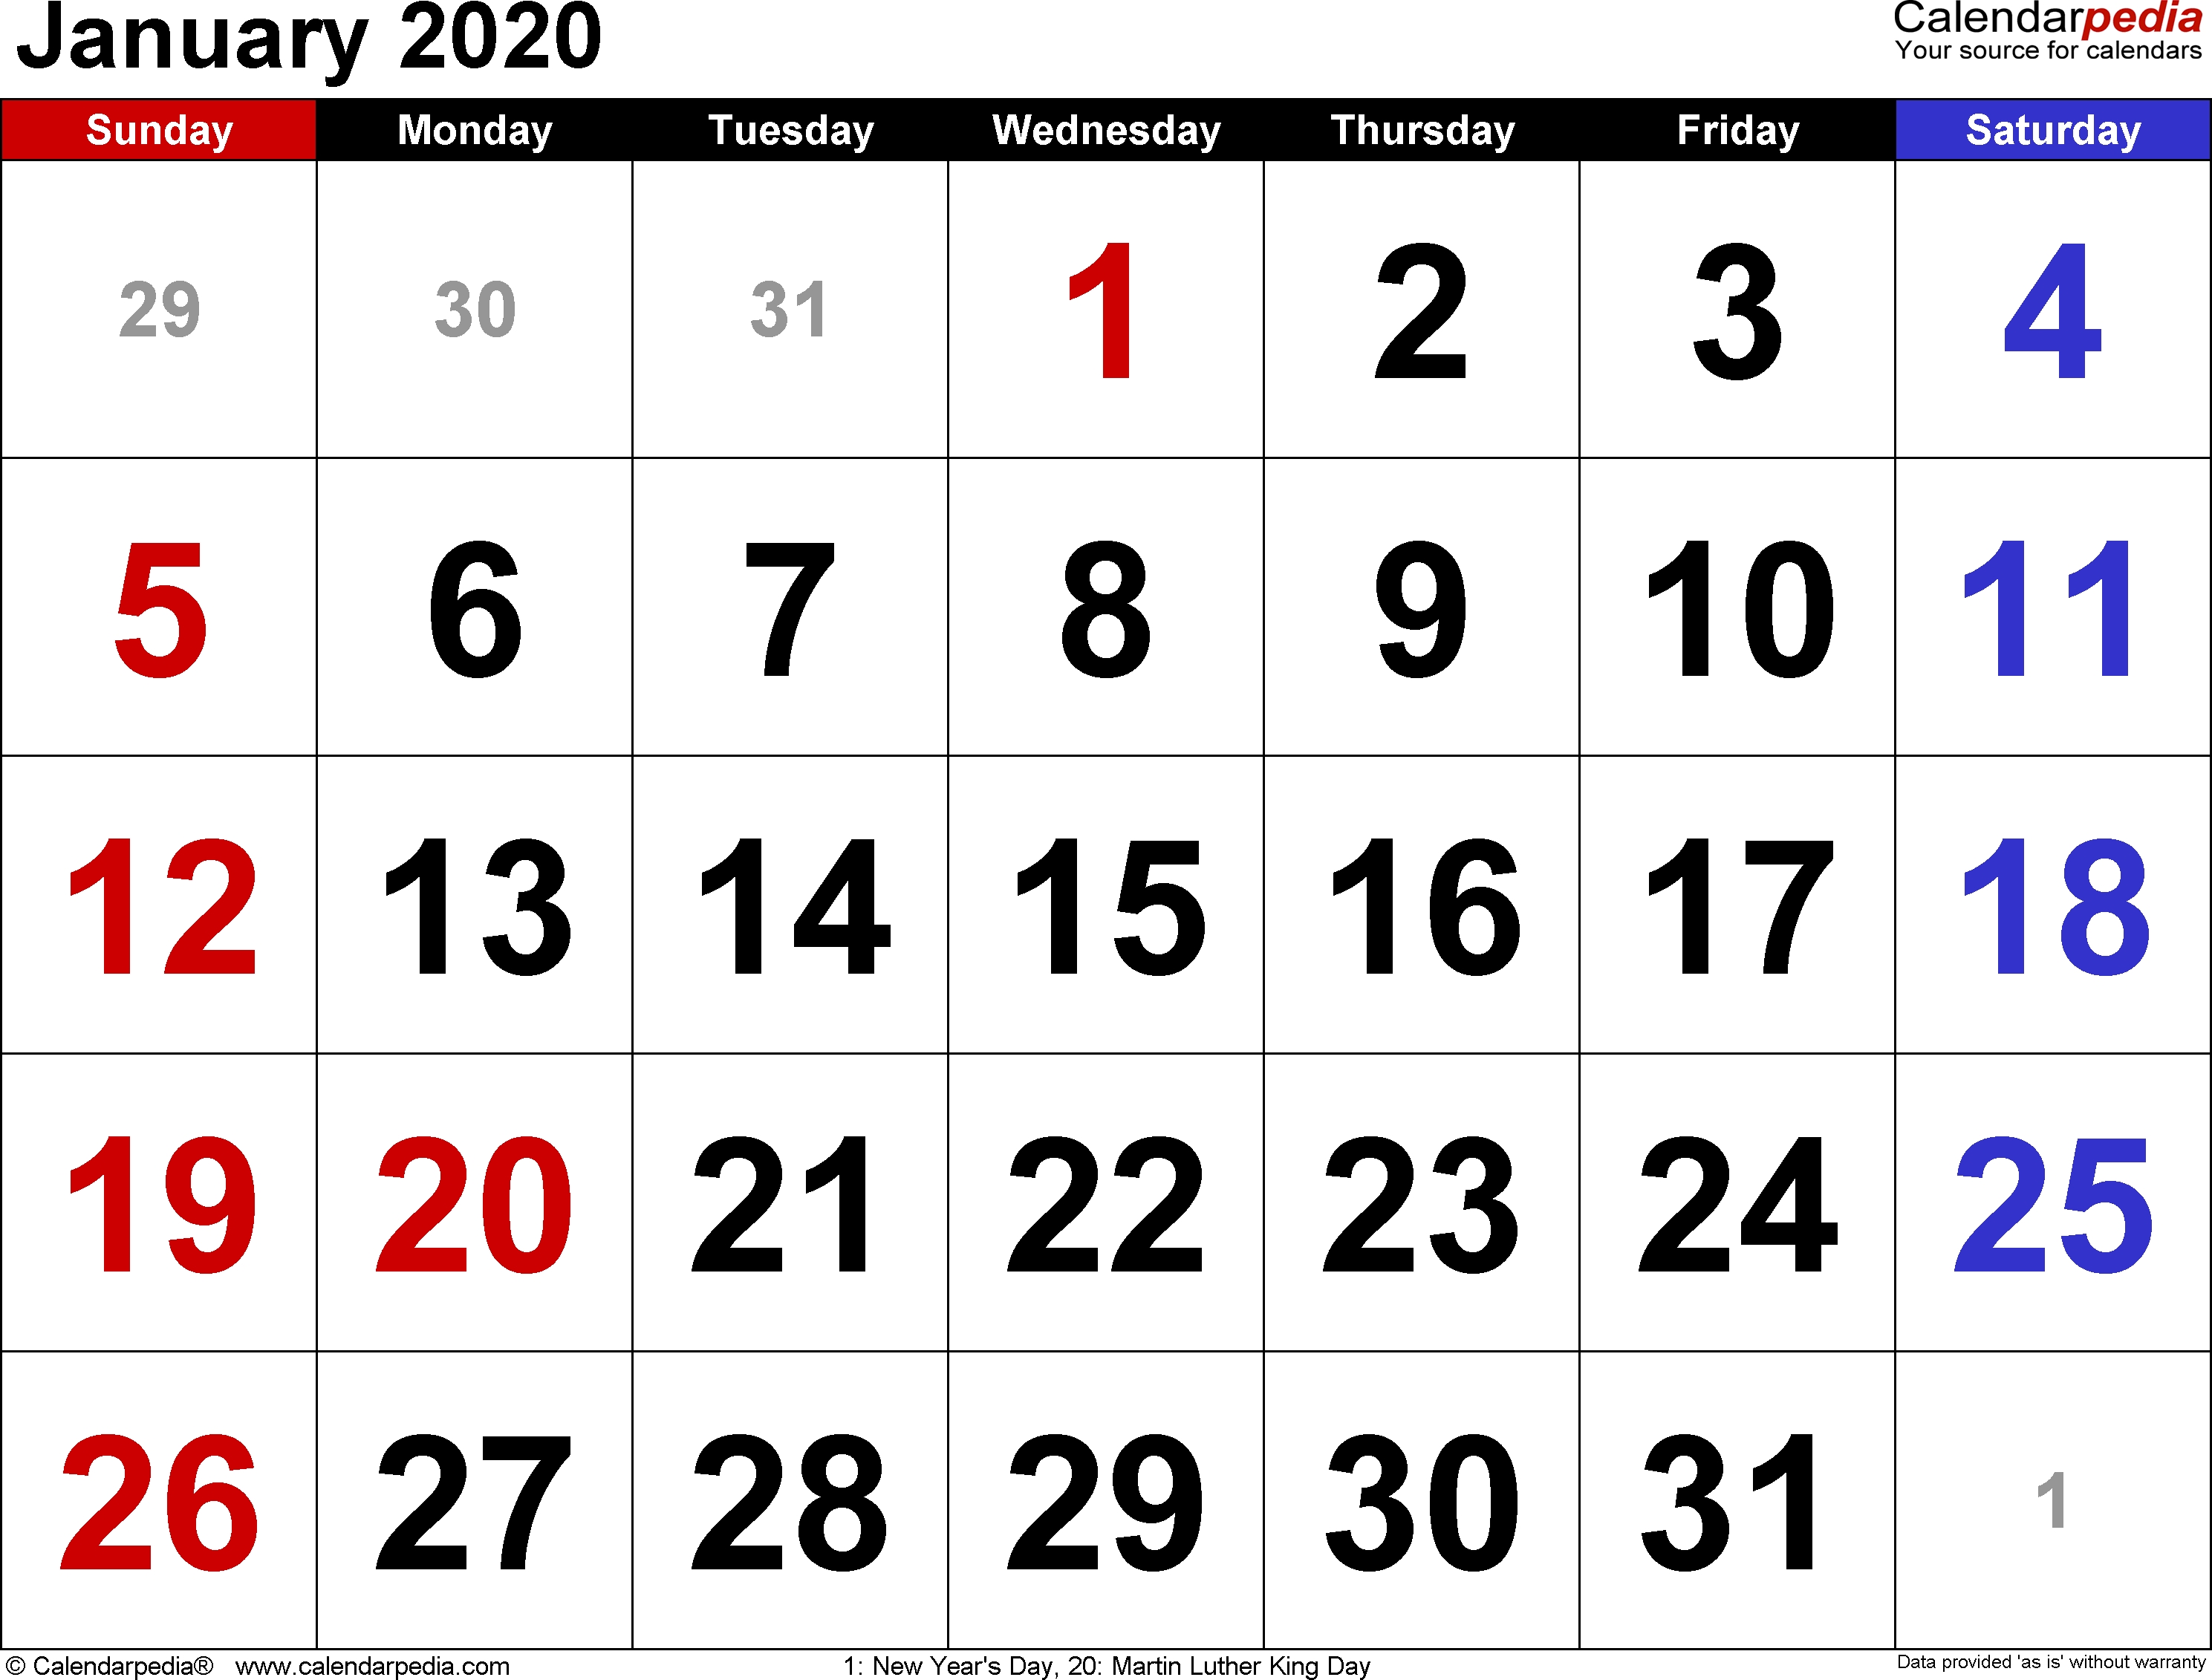 January 2020 Calendars For Word, Excel &amp; Pdf 2020 Calendar For January